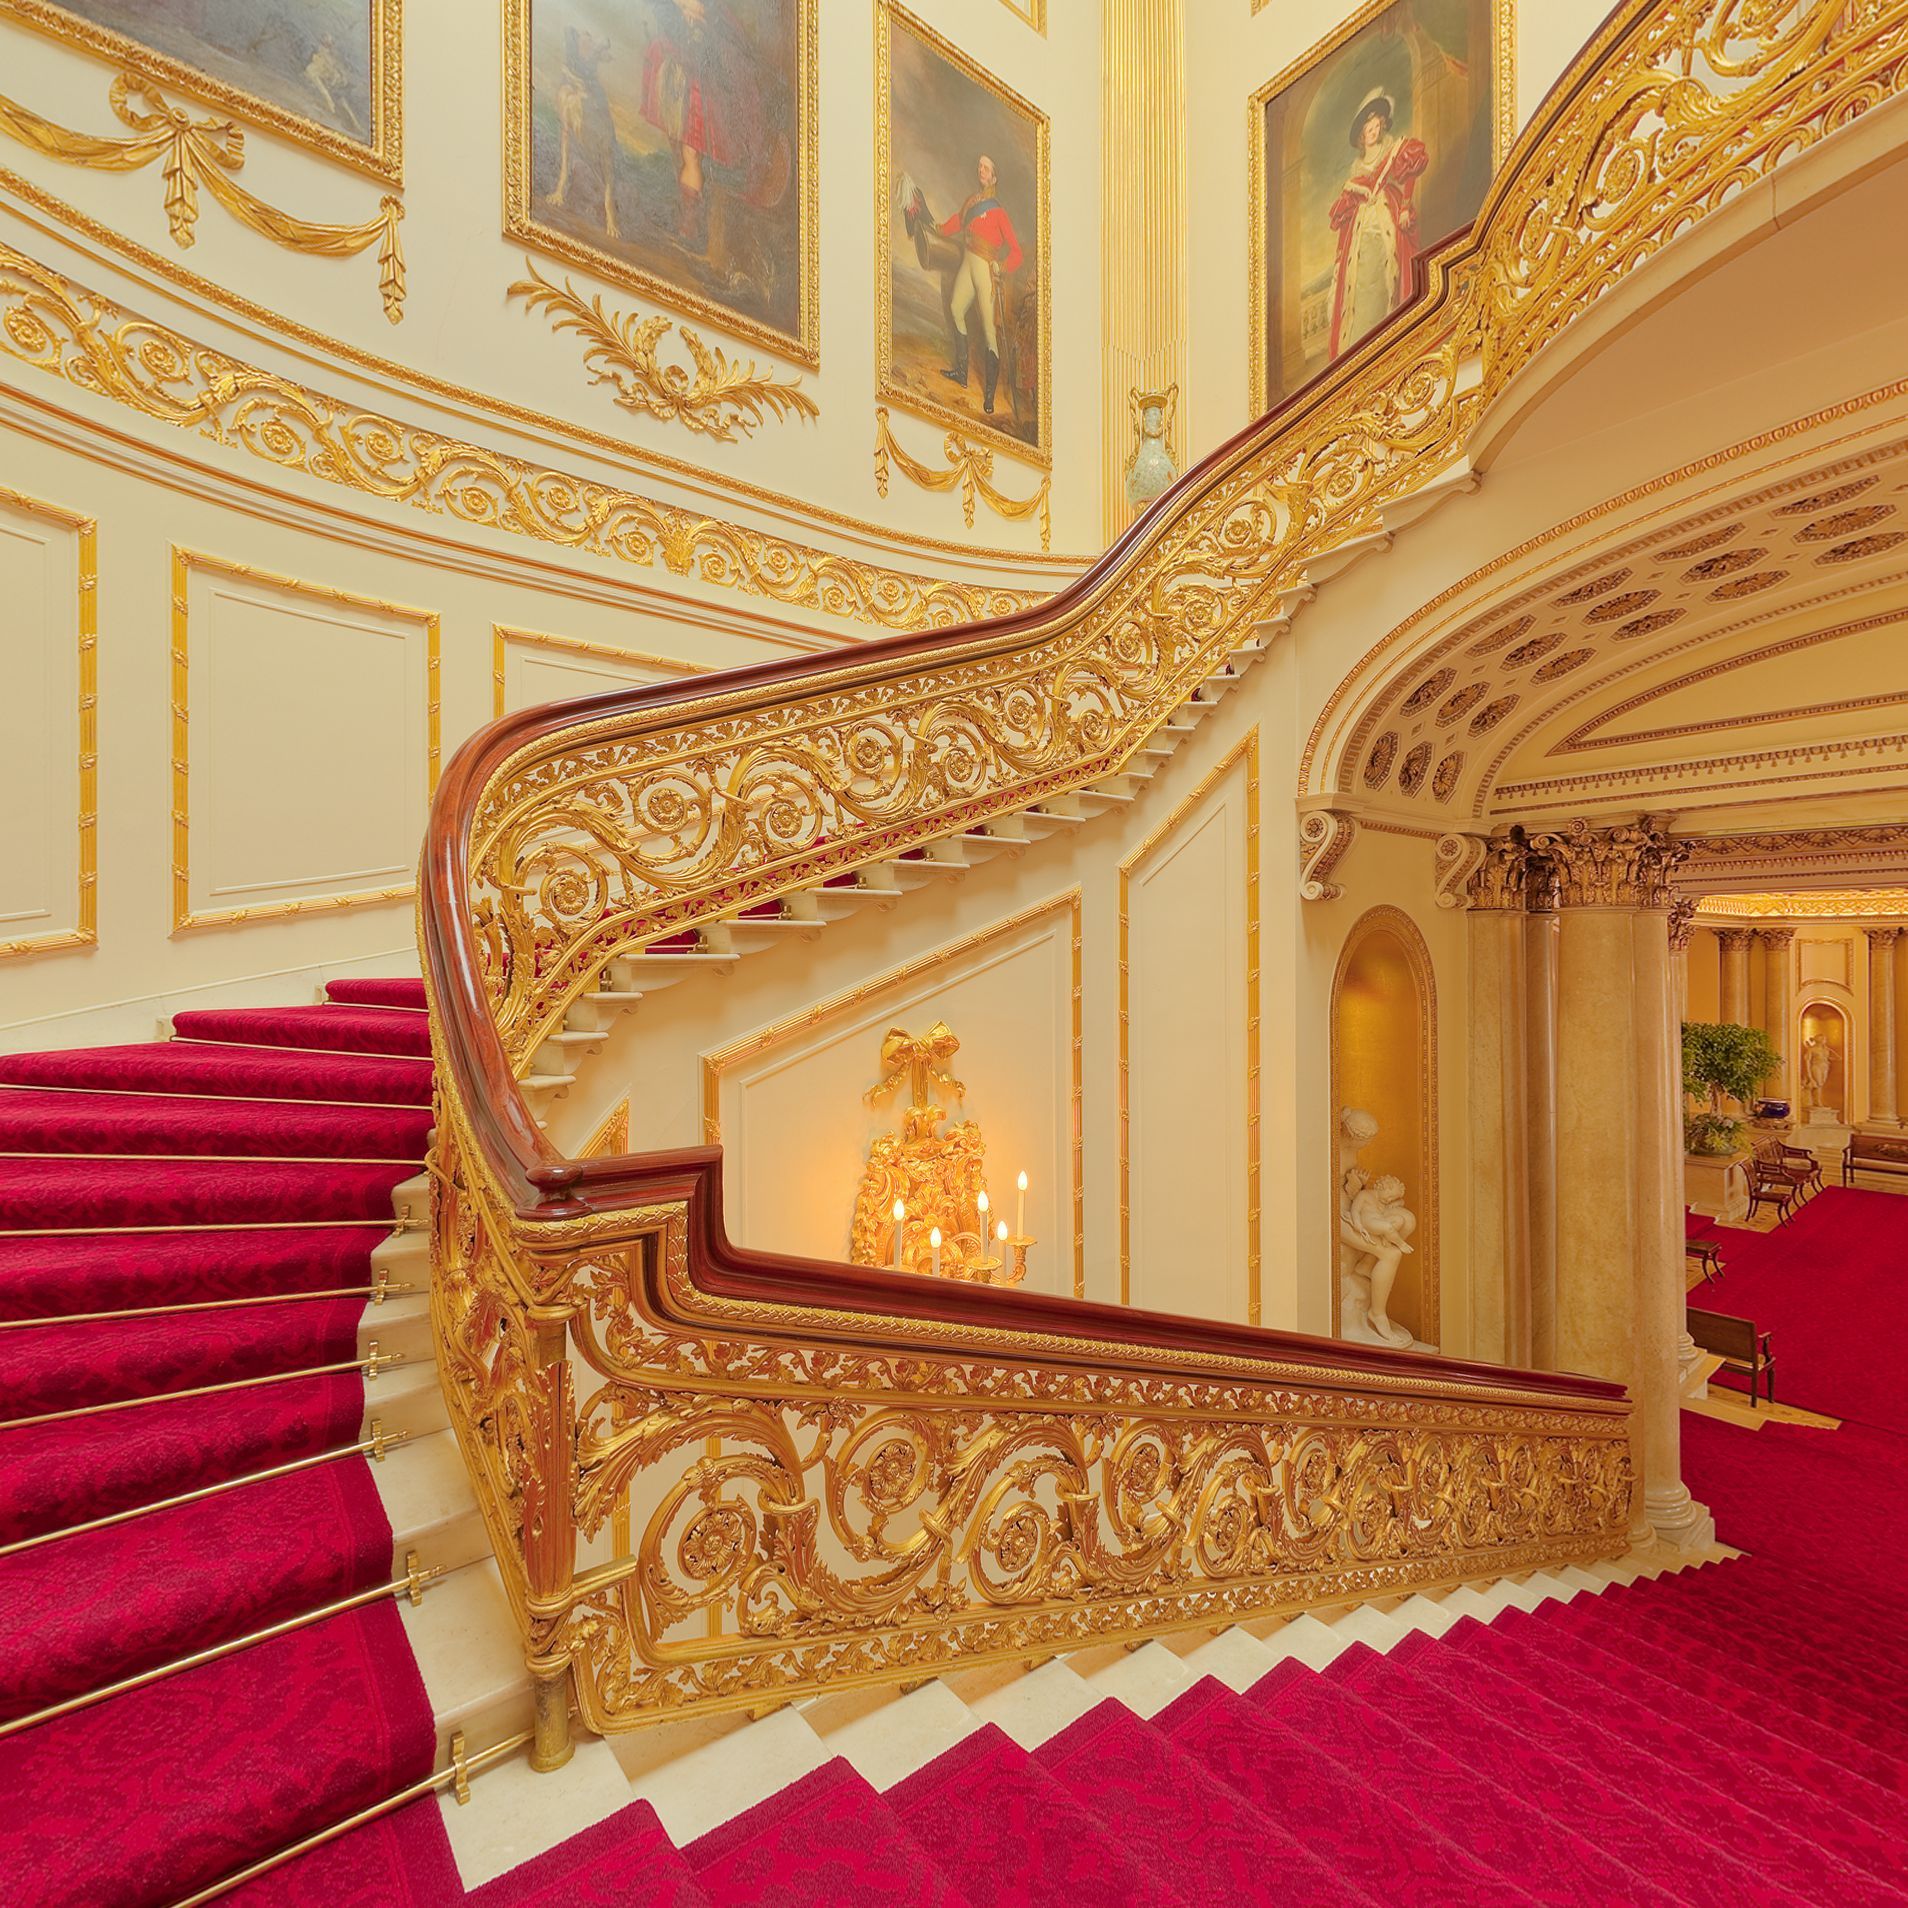 Buckingham Palace staircase | Chateau and Palace | Pinterest ...